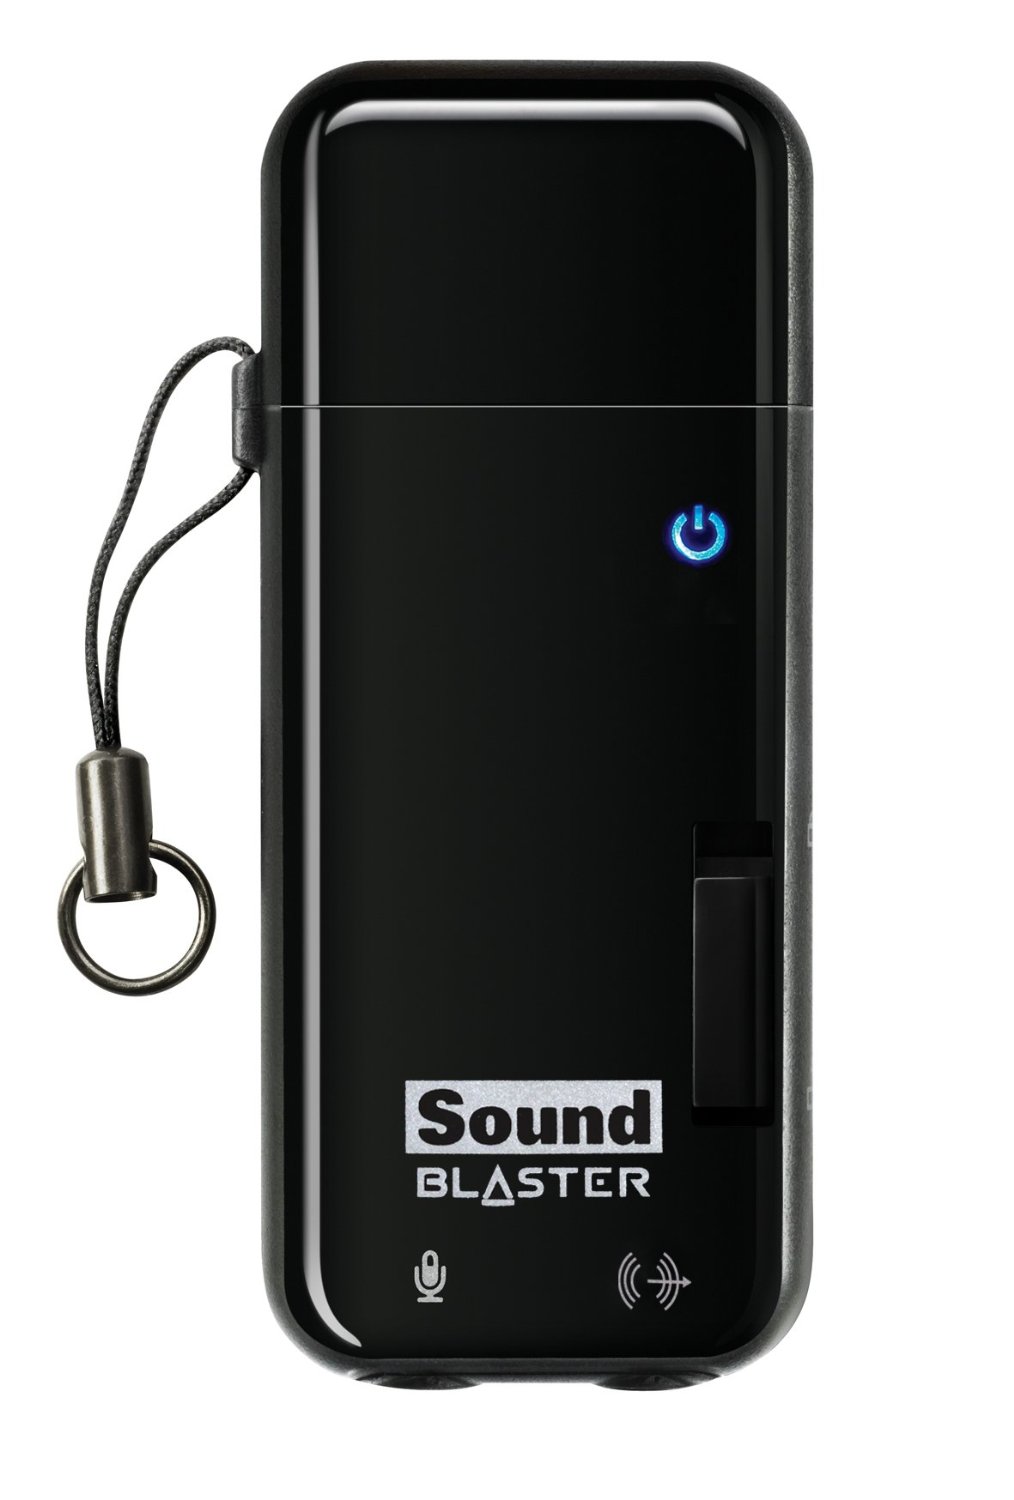 Sound blaster drivers windows 10